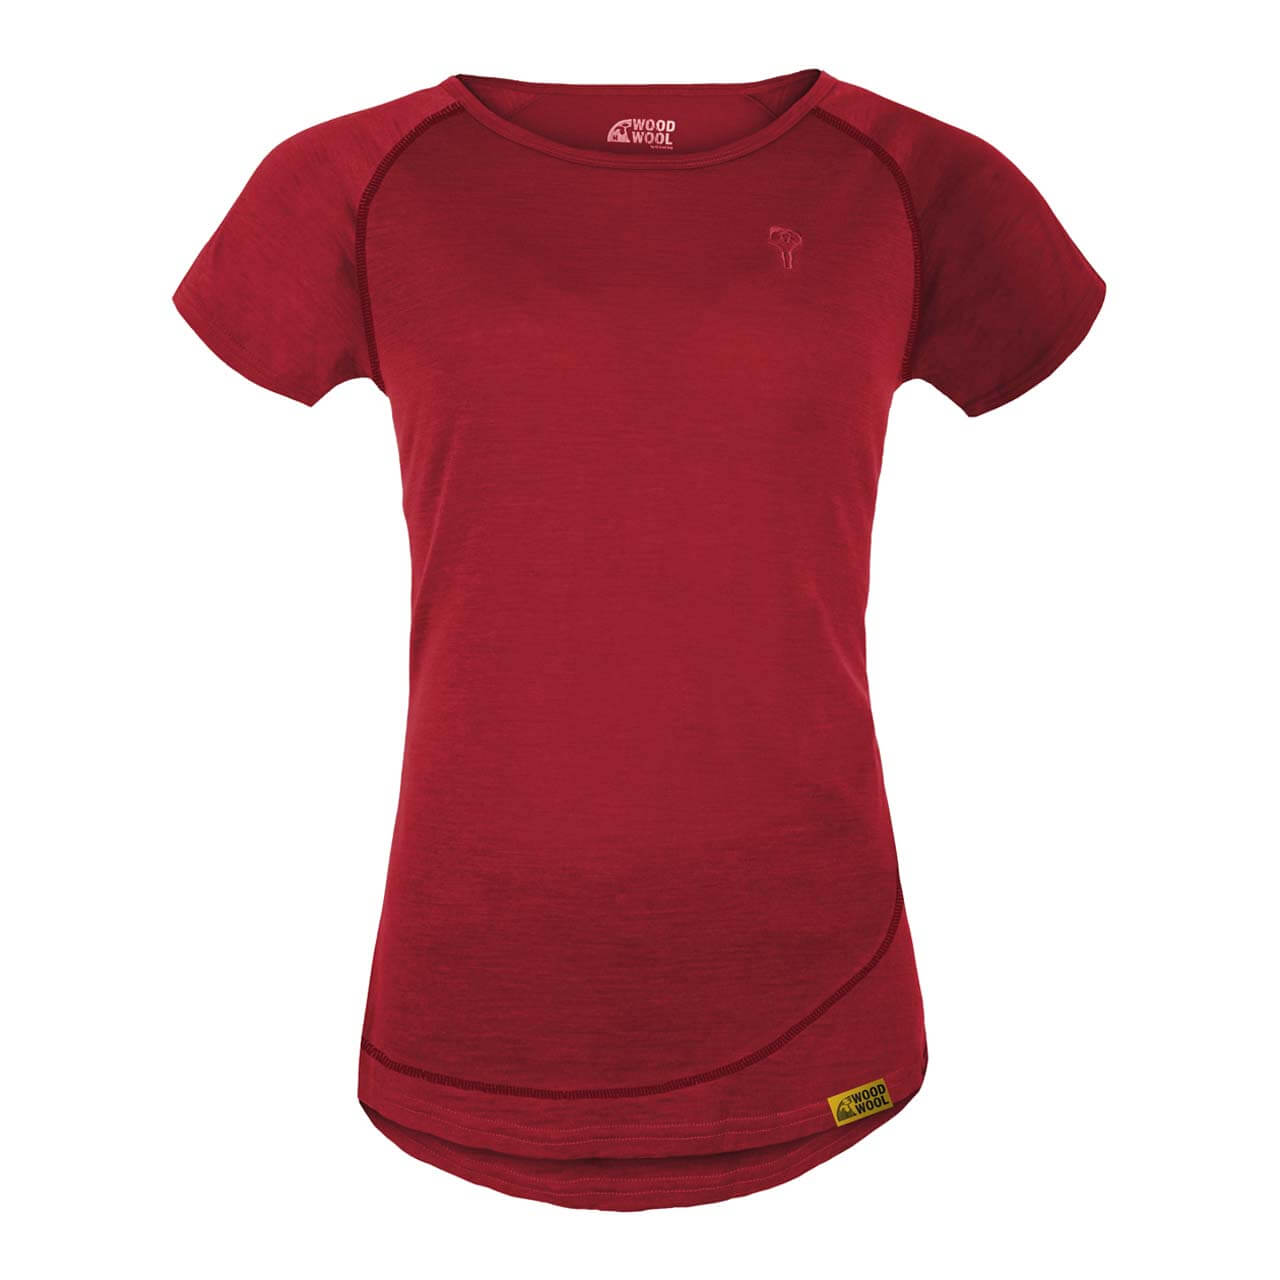 Grüezi Bag WoodWool T-Shirt Lady Burnham - Fired Red Brick, M von Grüezi Bag